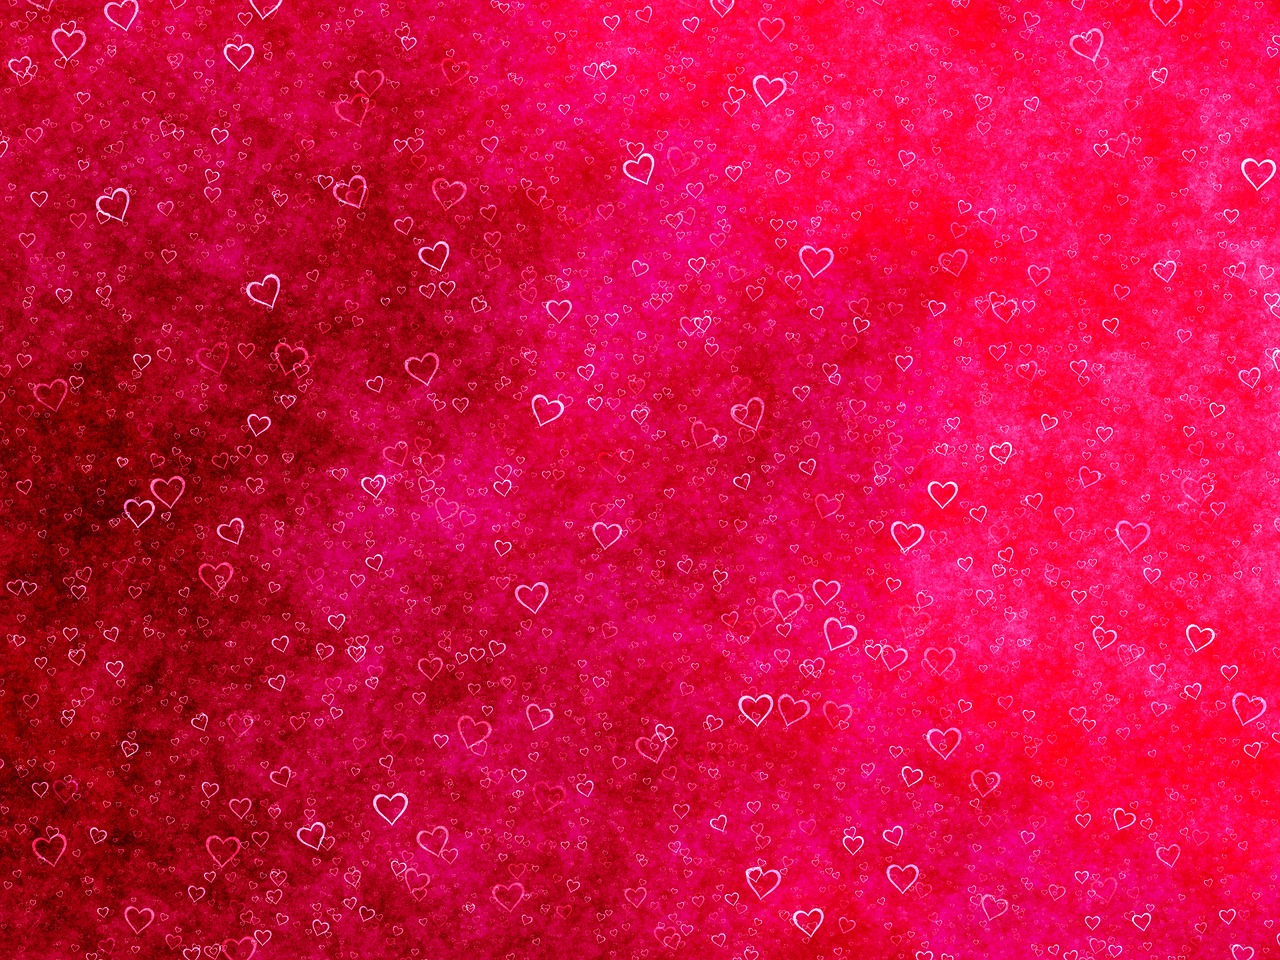 grunge hearts pink texture free photo